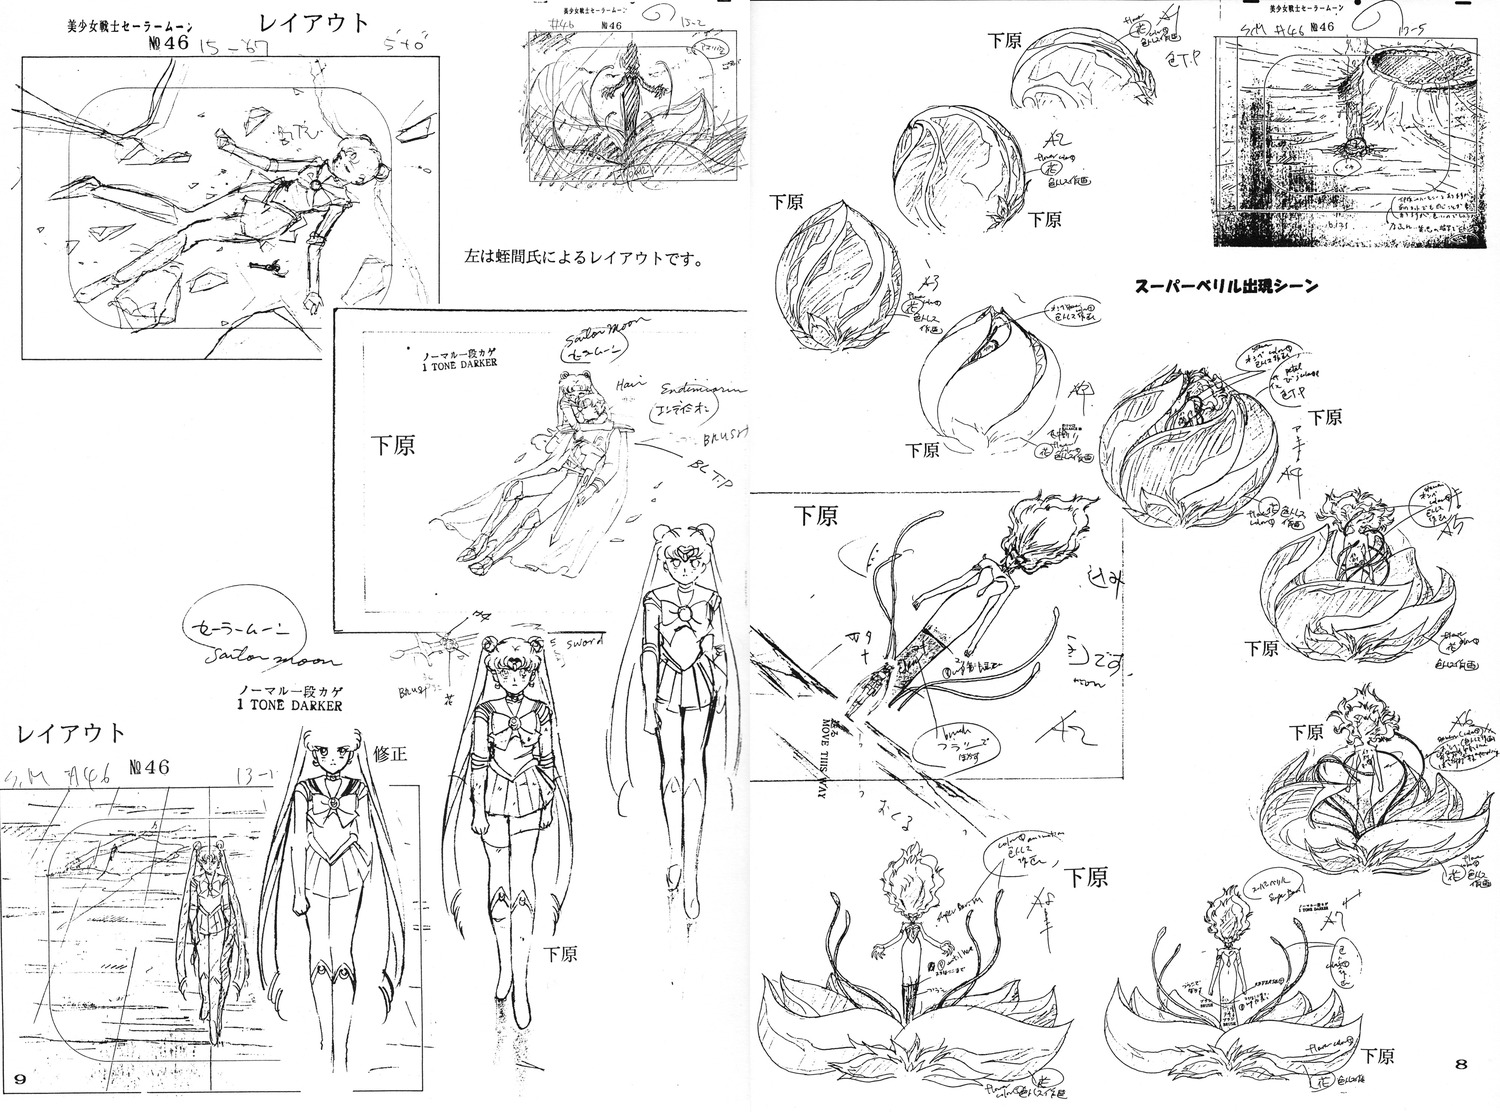 artist_unknown bishoujo_senshi_sailor_moon bishoujo_senshi_sailor_moon_(1992) correction daisuke_hiruma genga hiromi_matsushita kazuko_tadano layout presumed production_materials